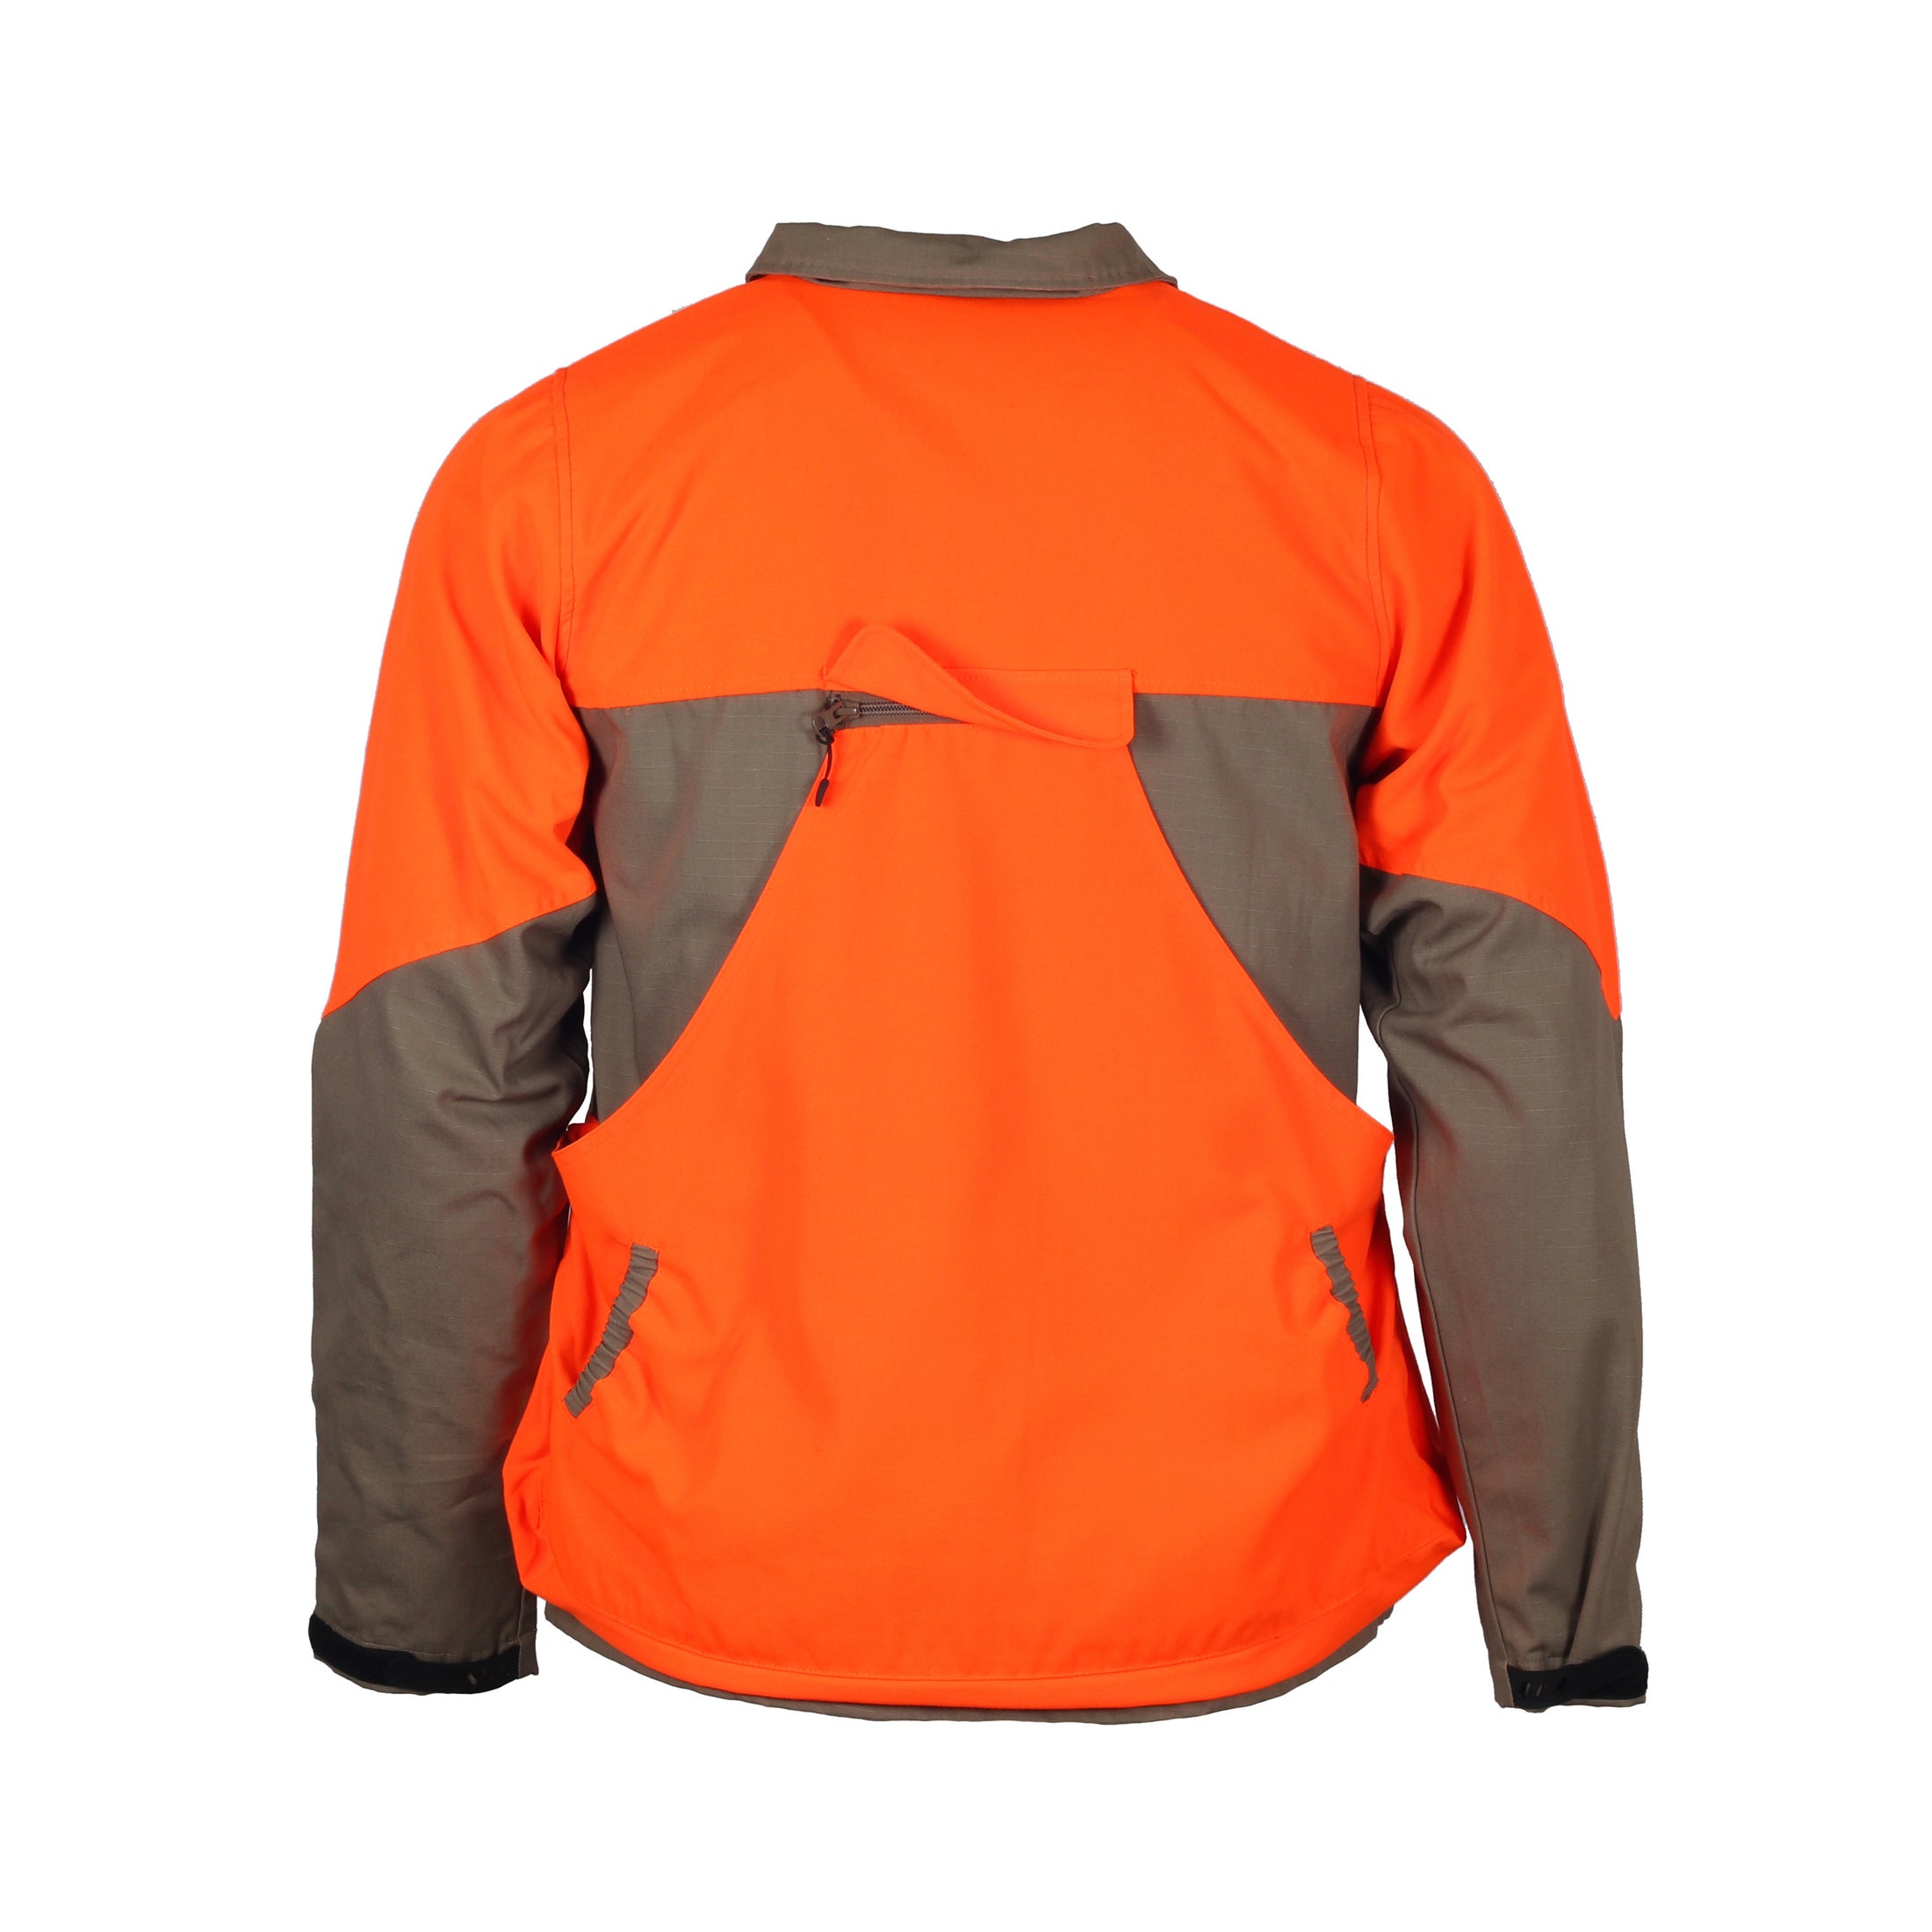 gamehide shelterbelt jacket front view (khaki/blaze orange)